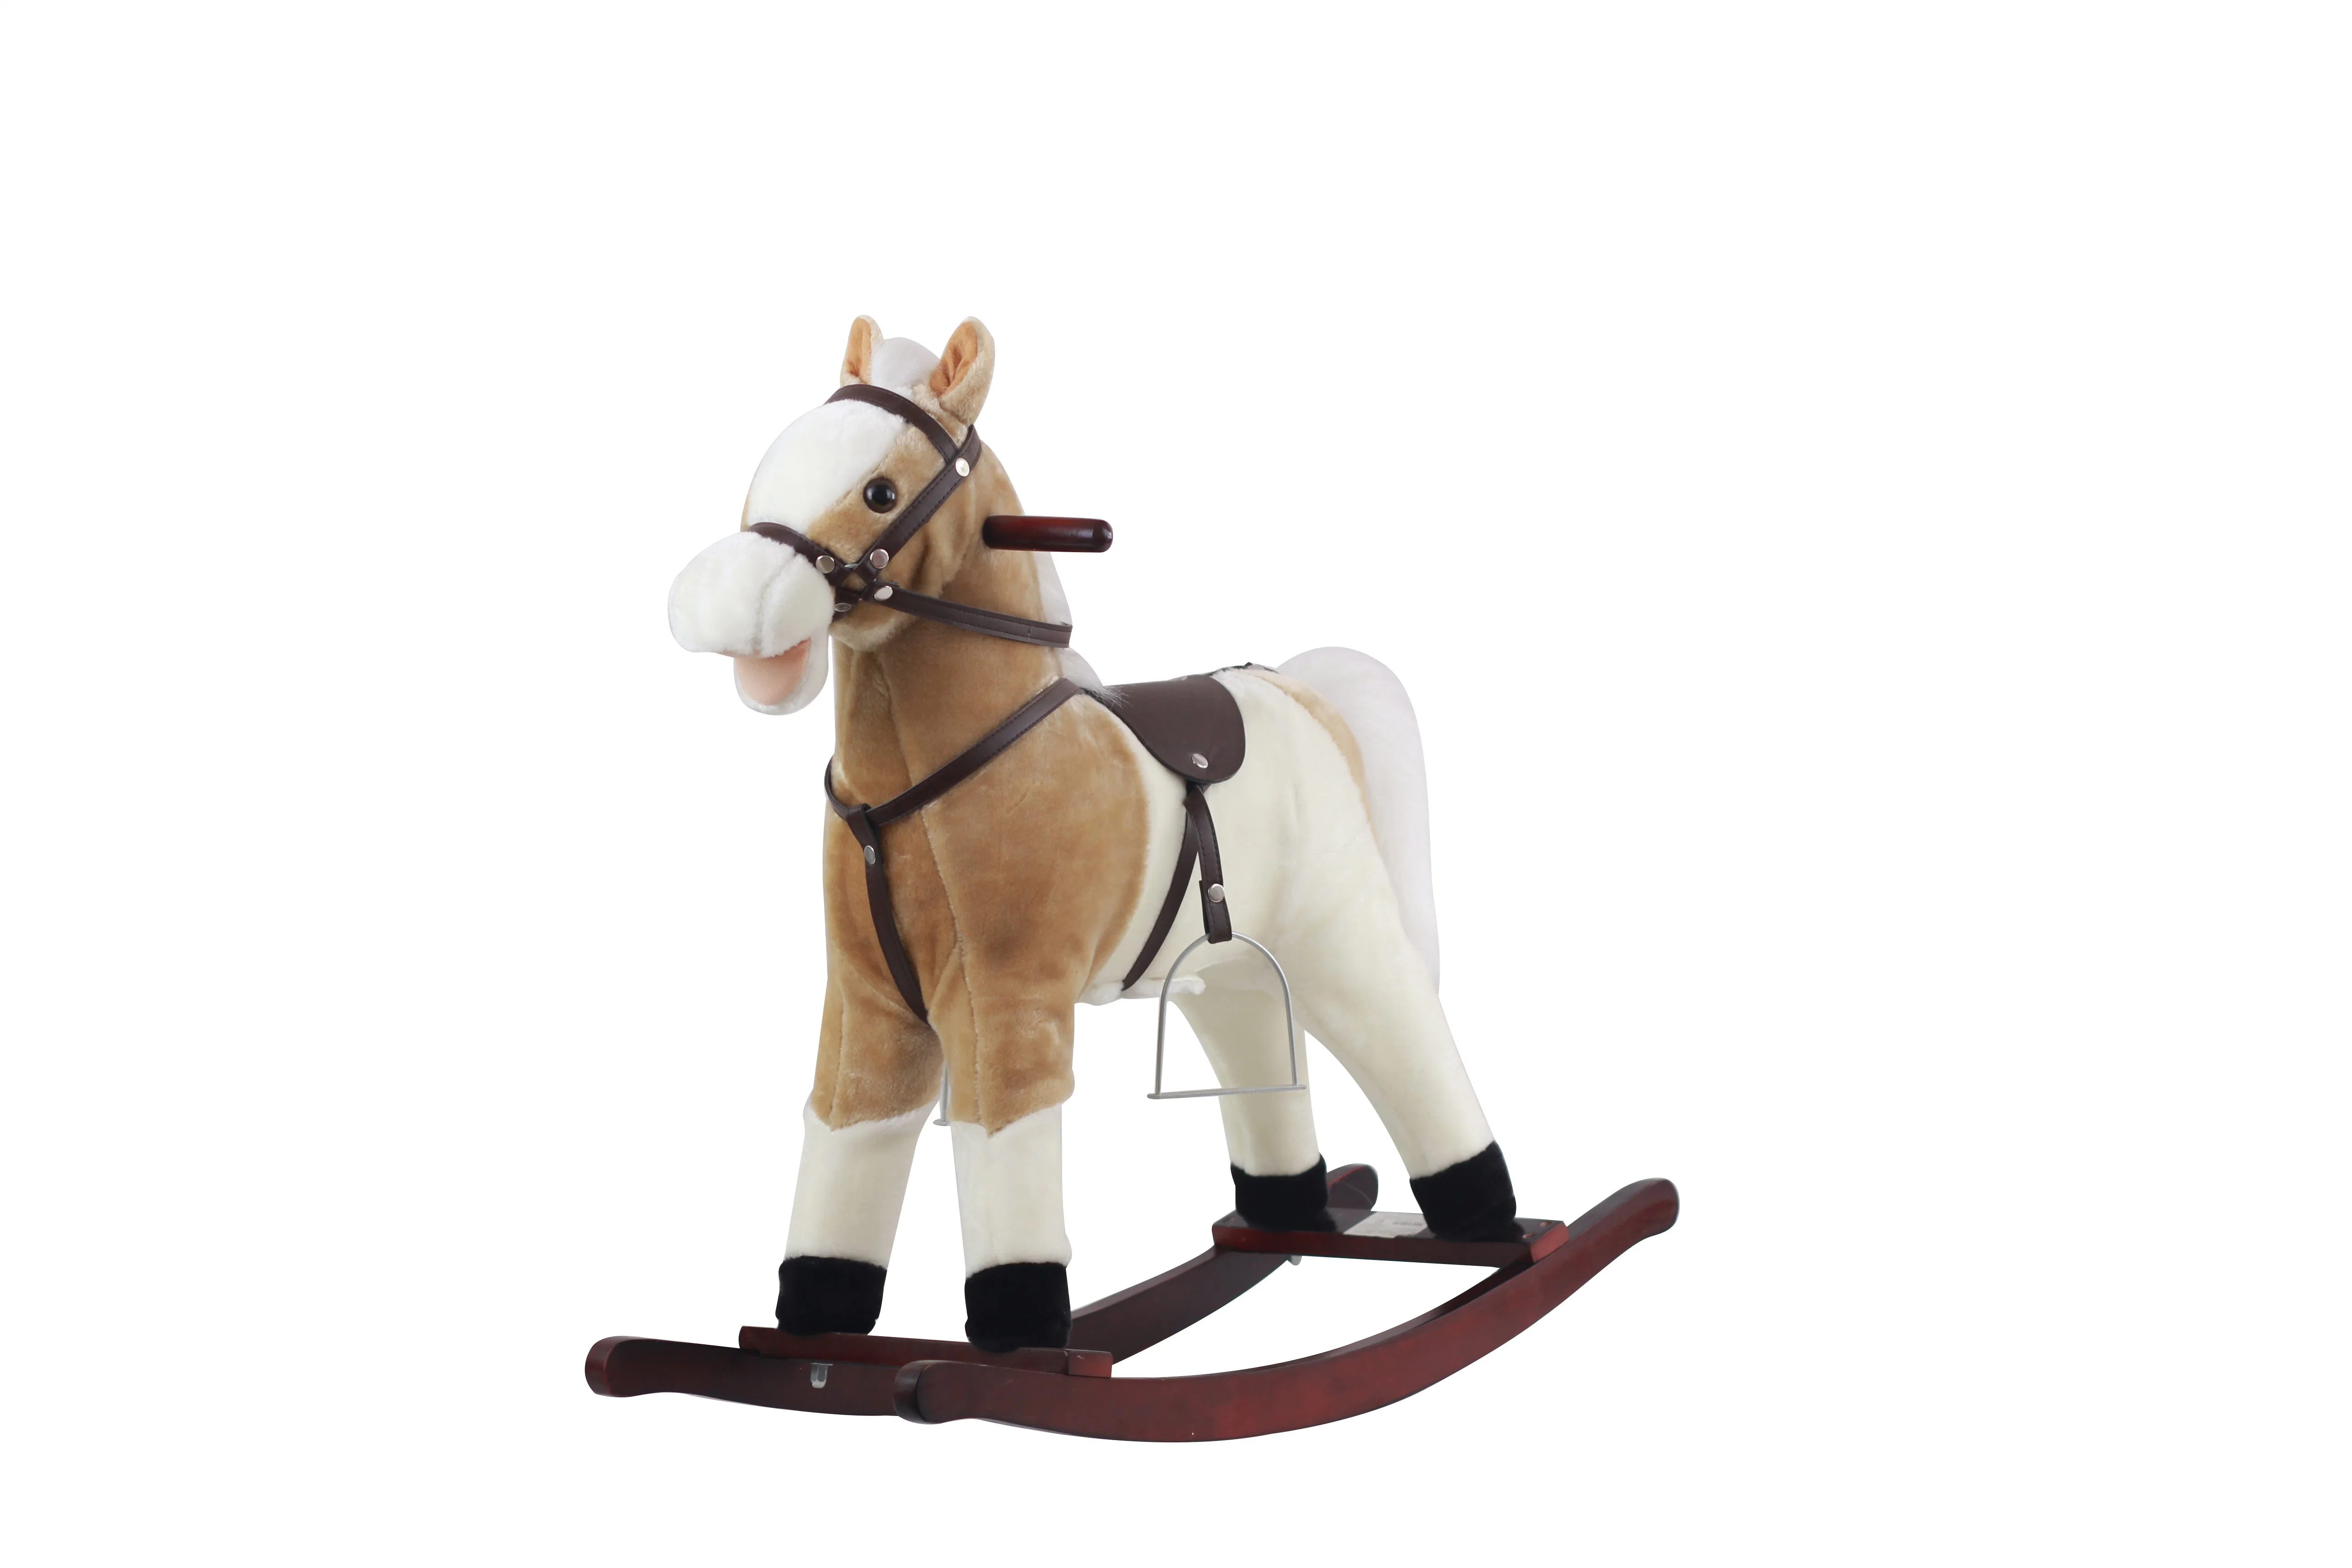 Silla mecedora para niños al por mayor, caballo mecedor de juguete de peluche, muñecos de peluche de caballo mecedor de madera para montar